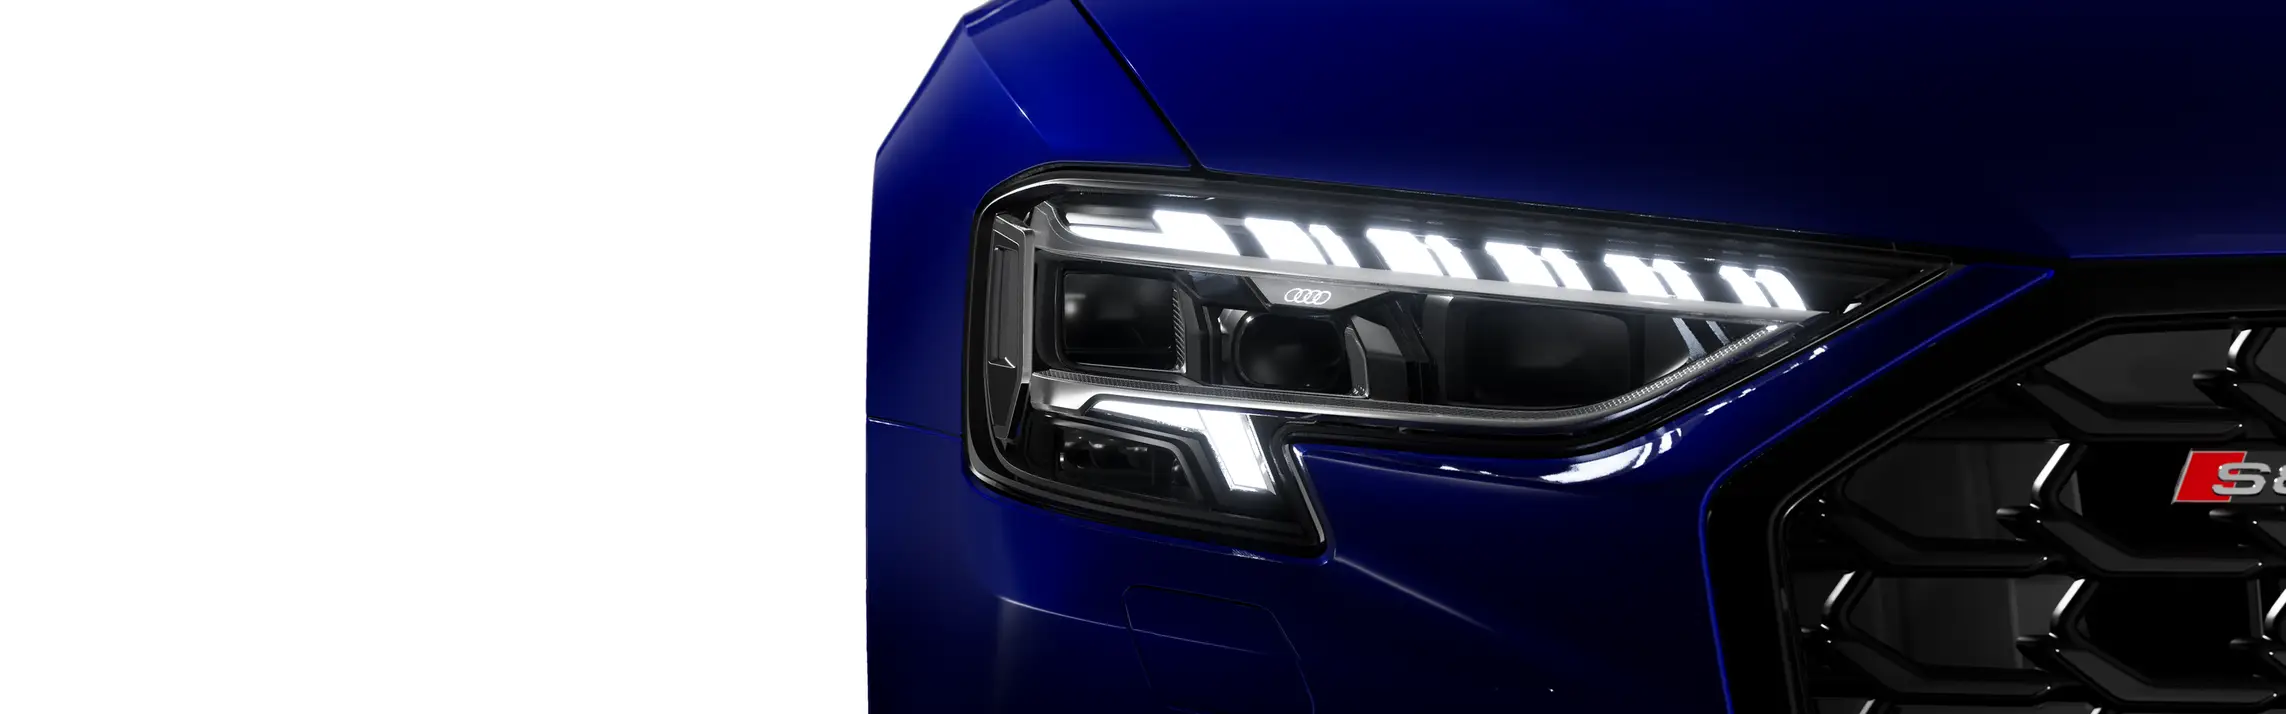 Audi S8 exterior - Headlight